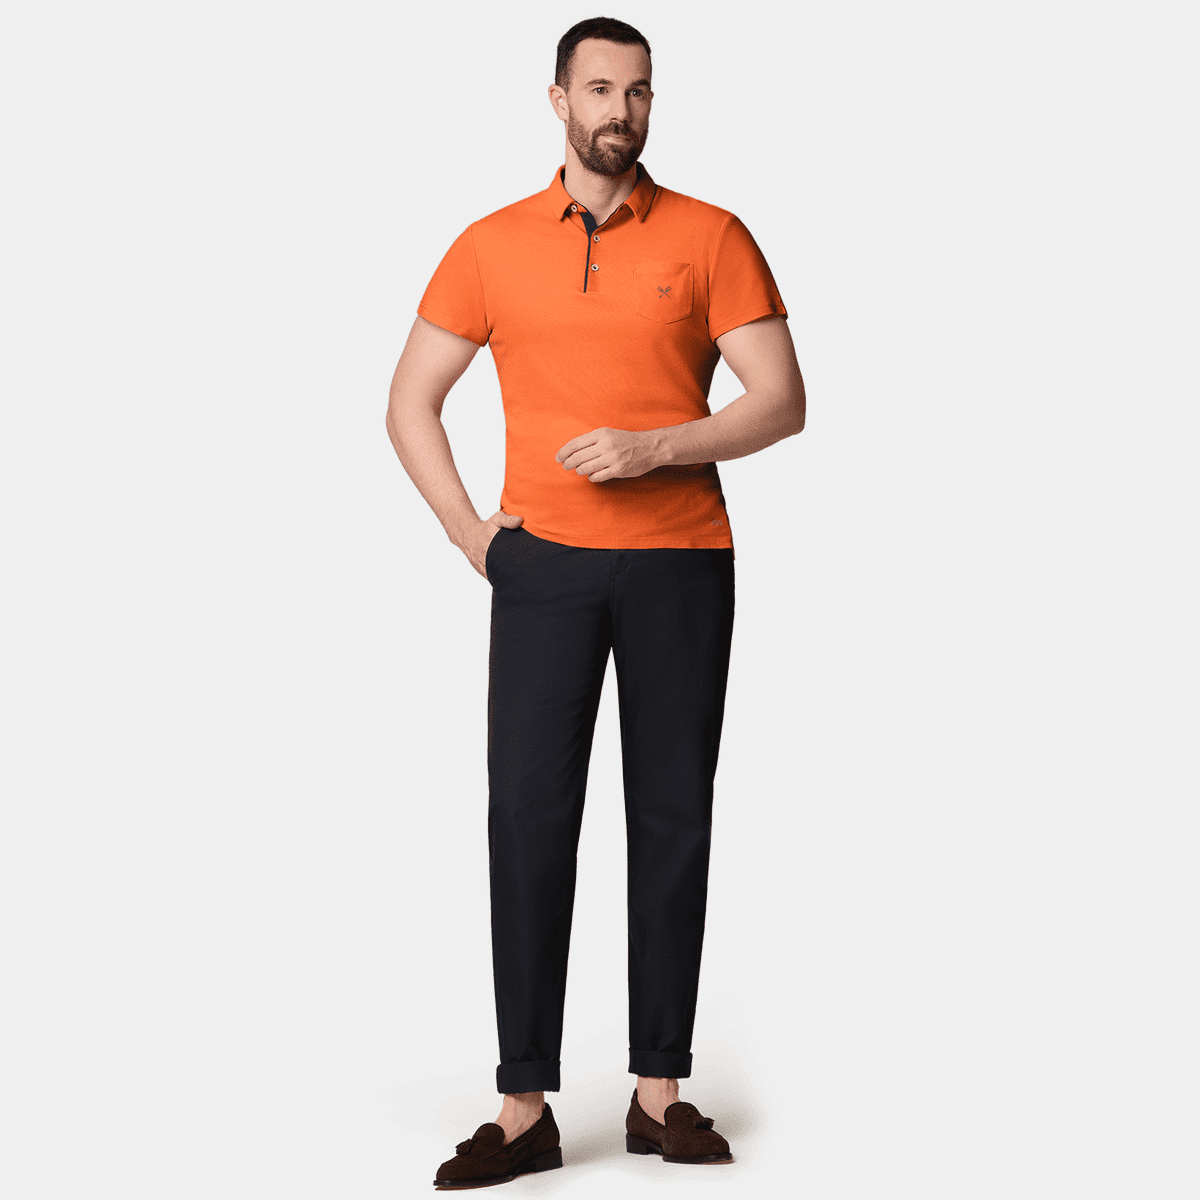 Dior Homme Collar Short Sleeve Polo Shirt - Orange Polos, Clothing -  HMM45959